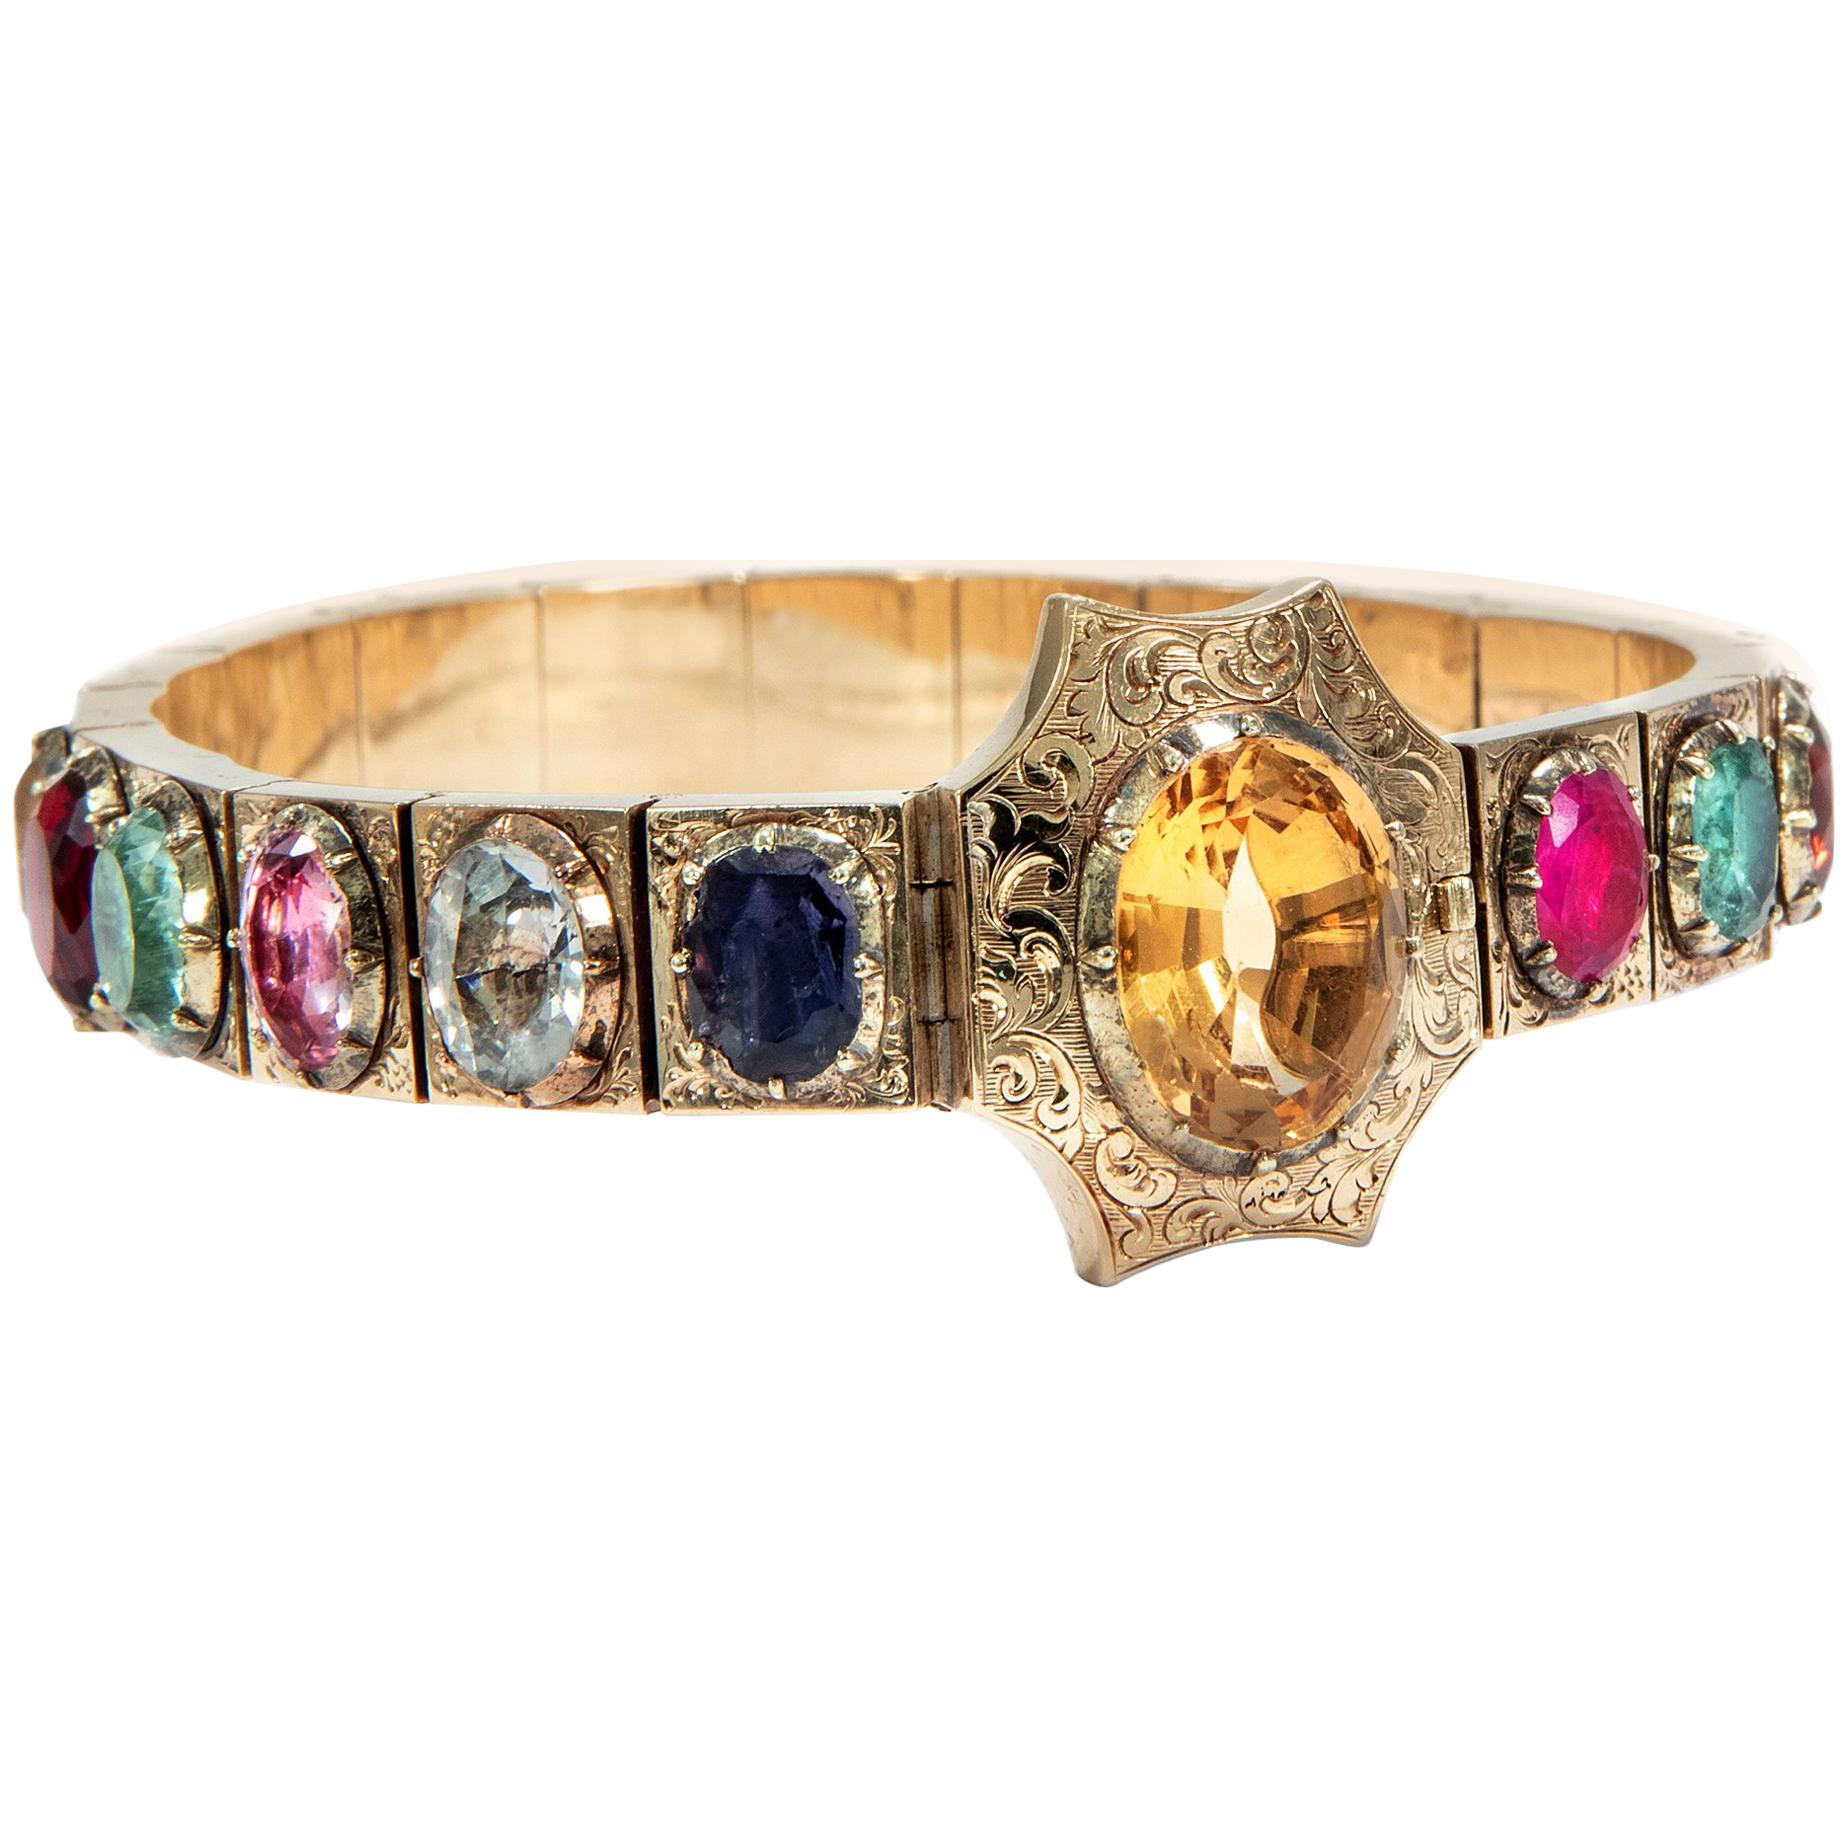 Victorian circa 1850 Ruby Sapphire Opal Emerald Multi Gemstone 18k Gold Bracelet